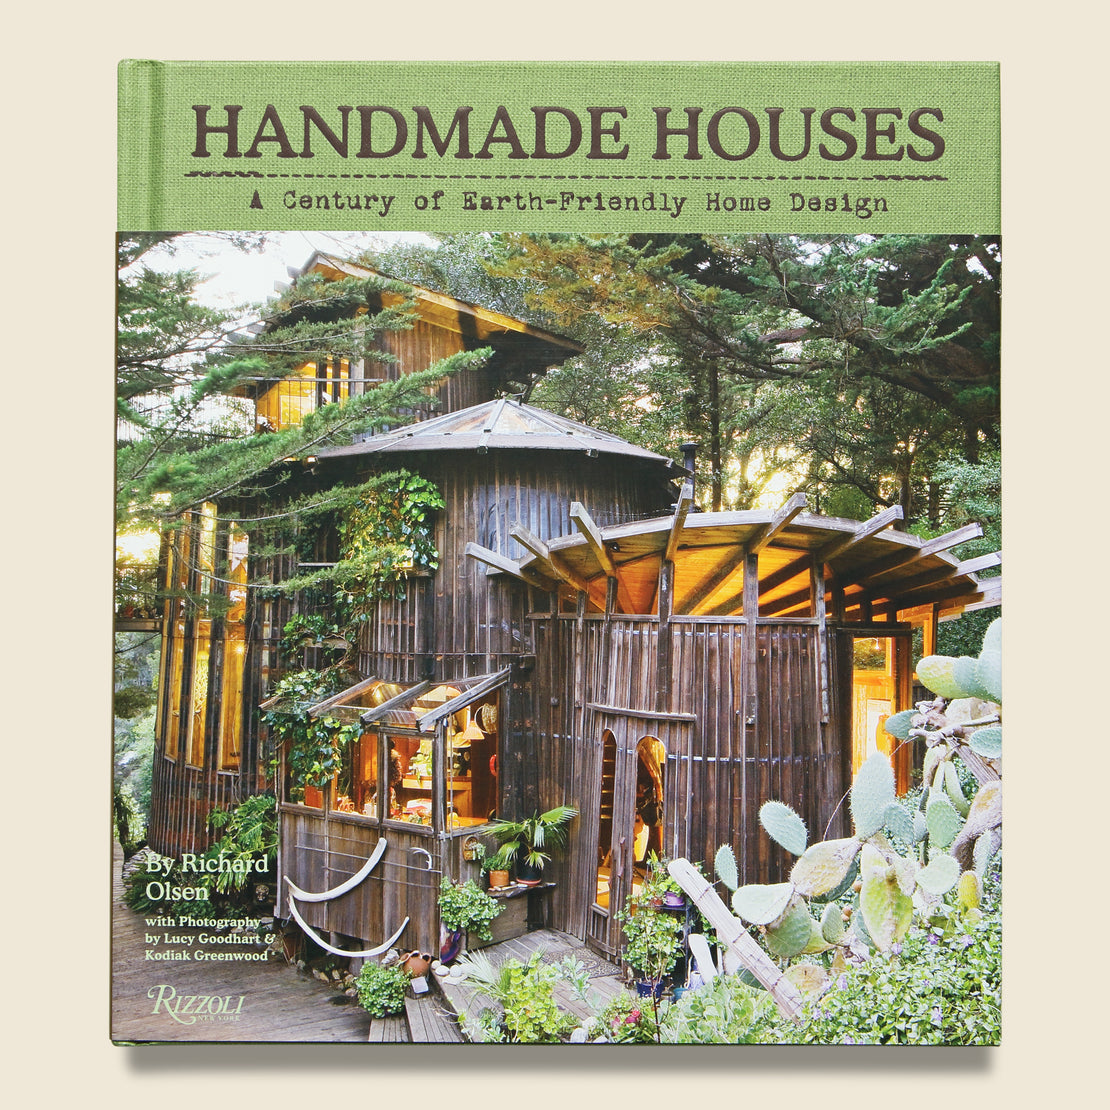 Bookstore Handmade Houses: A Century of Earth-Friendly Home Design - Richard Olsen